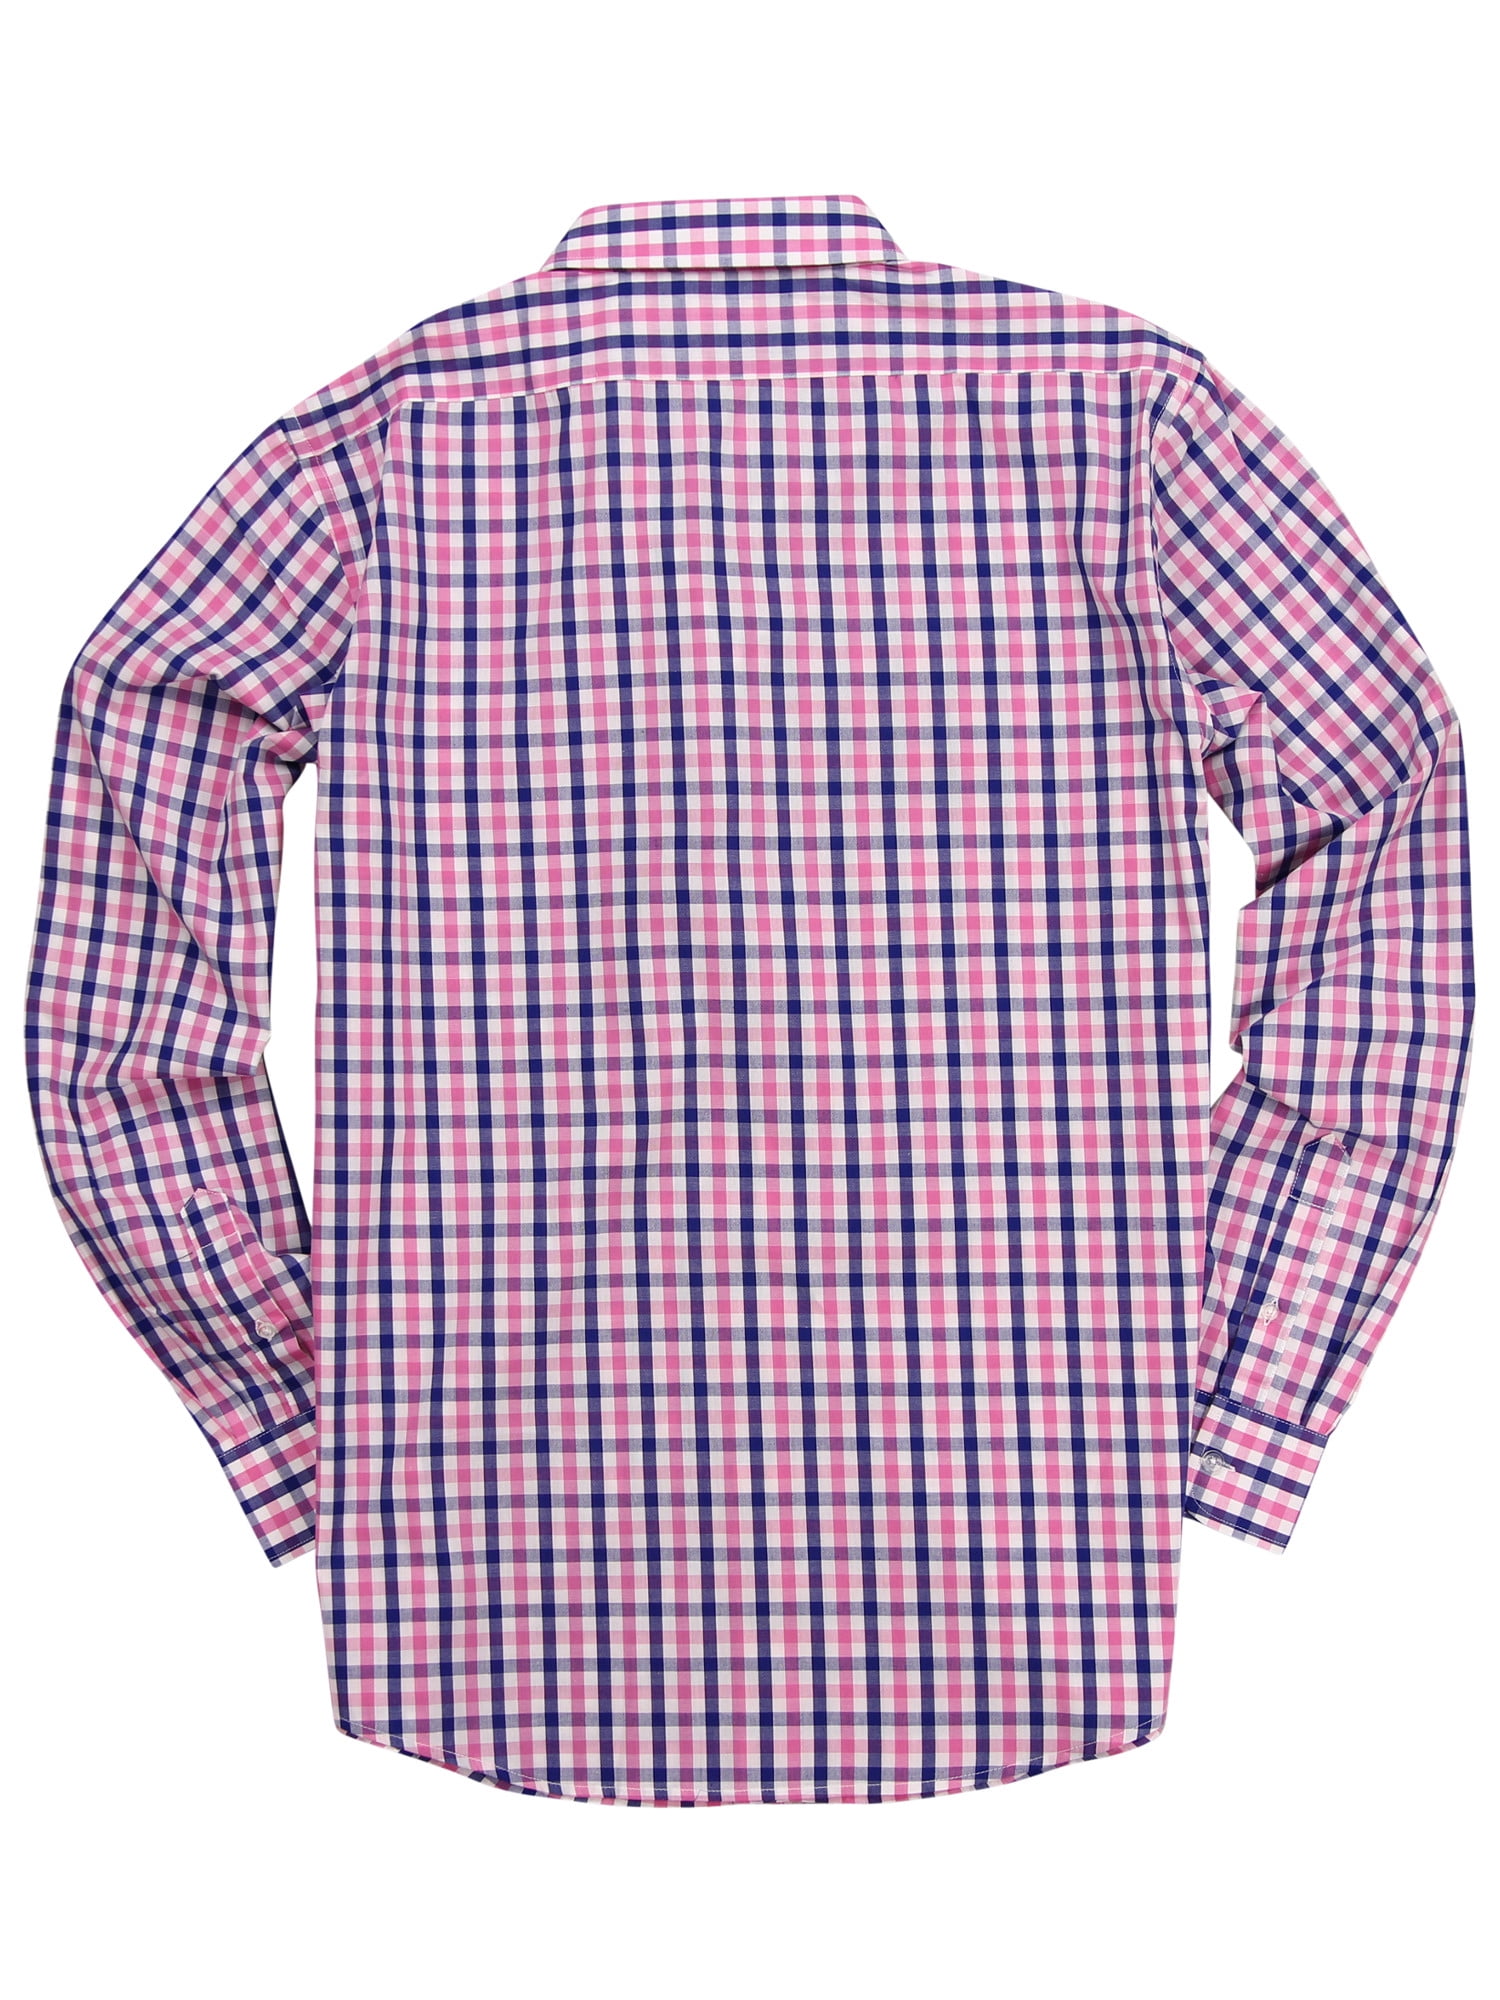 Mens Pink Plaid Flannel Shirt | vlr.eng.br